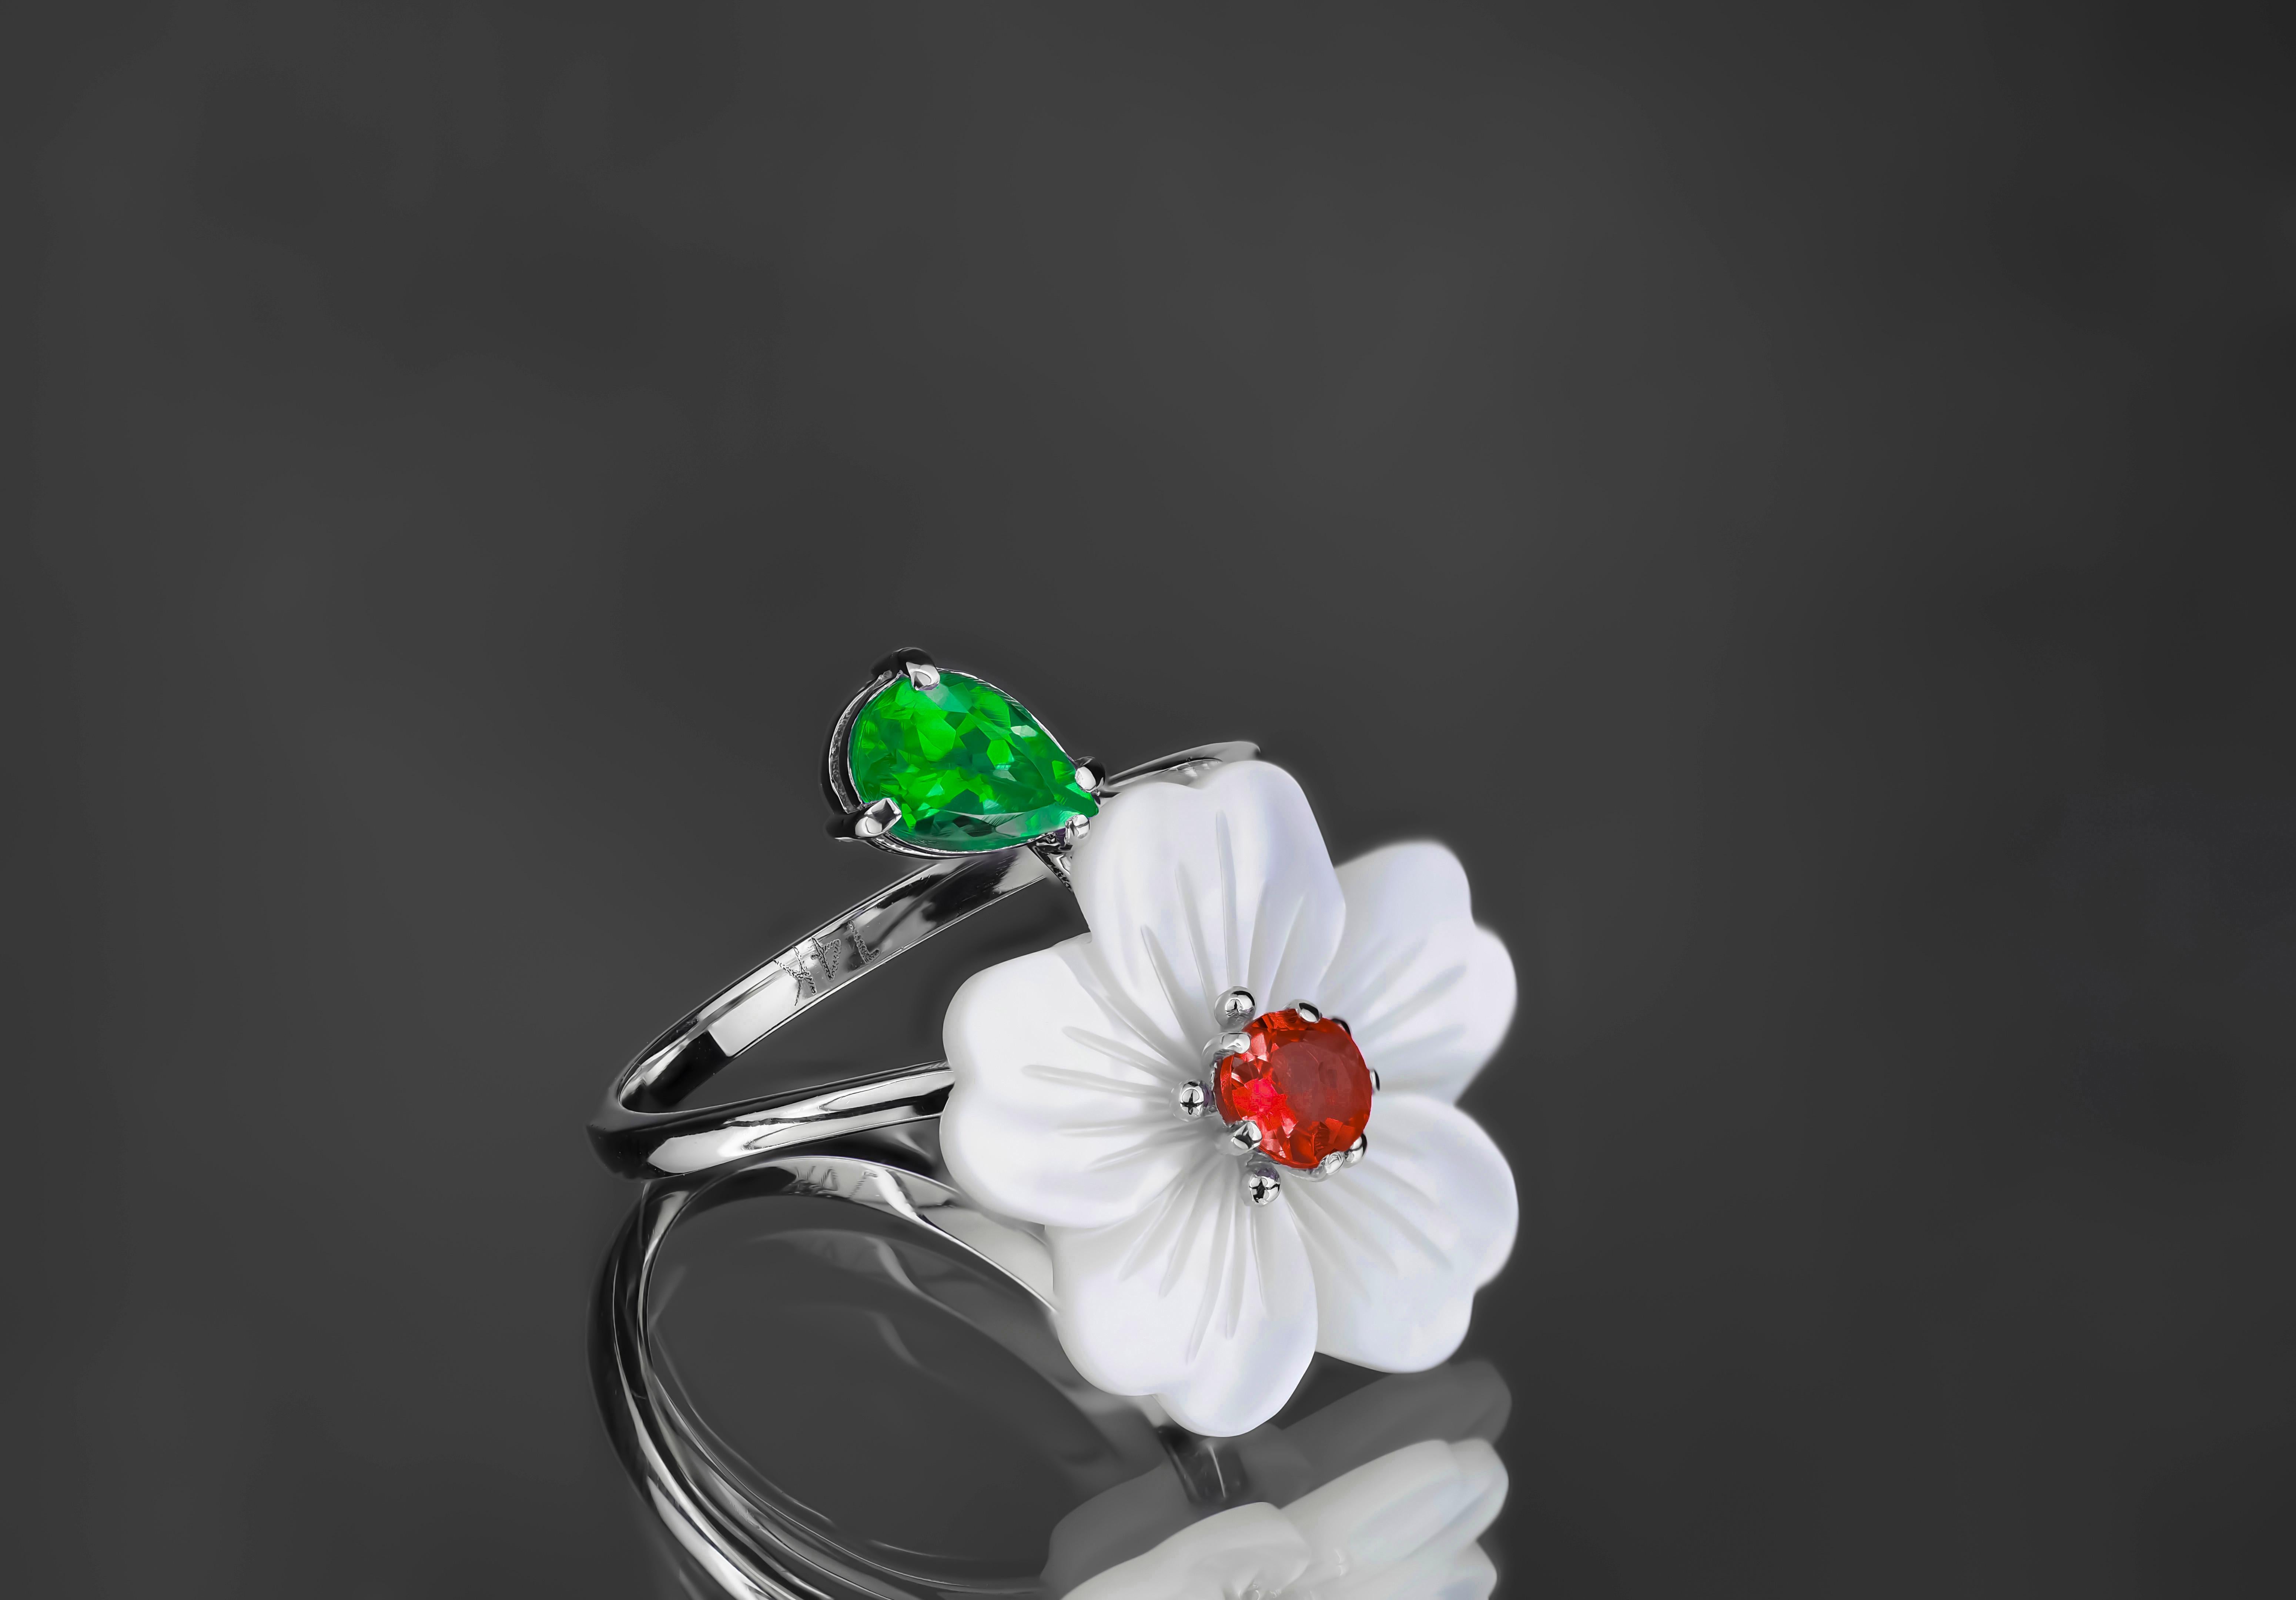 For Sale:  Carved Flower 14k ring with gemstones. 2